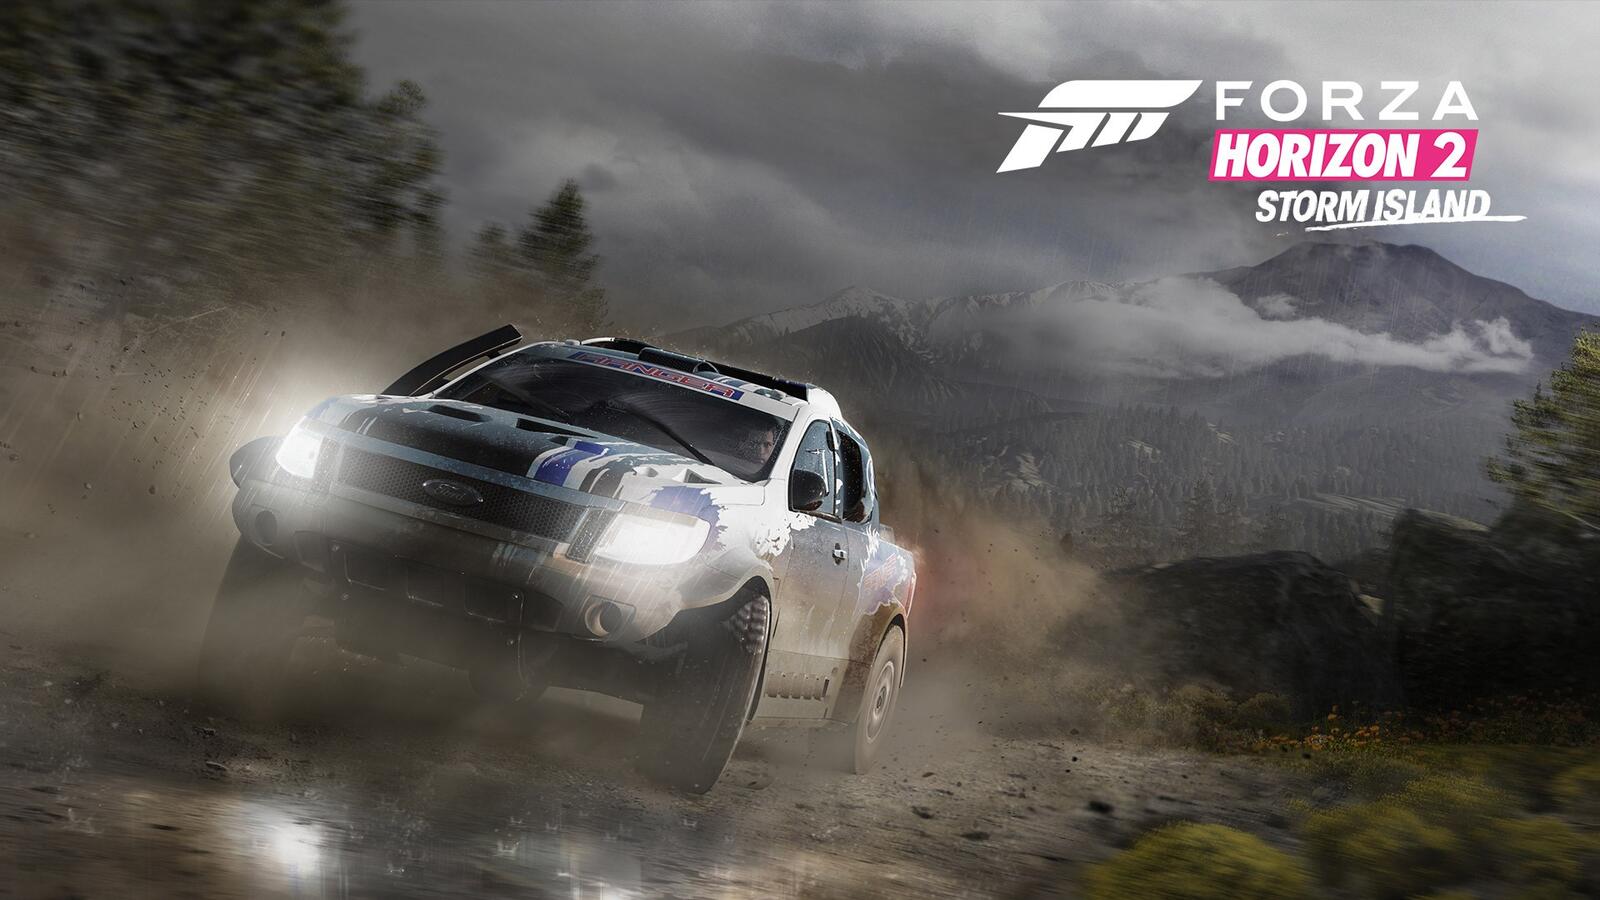 Free photo Dirt racing in Forza Horizon 2